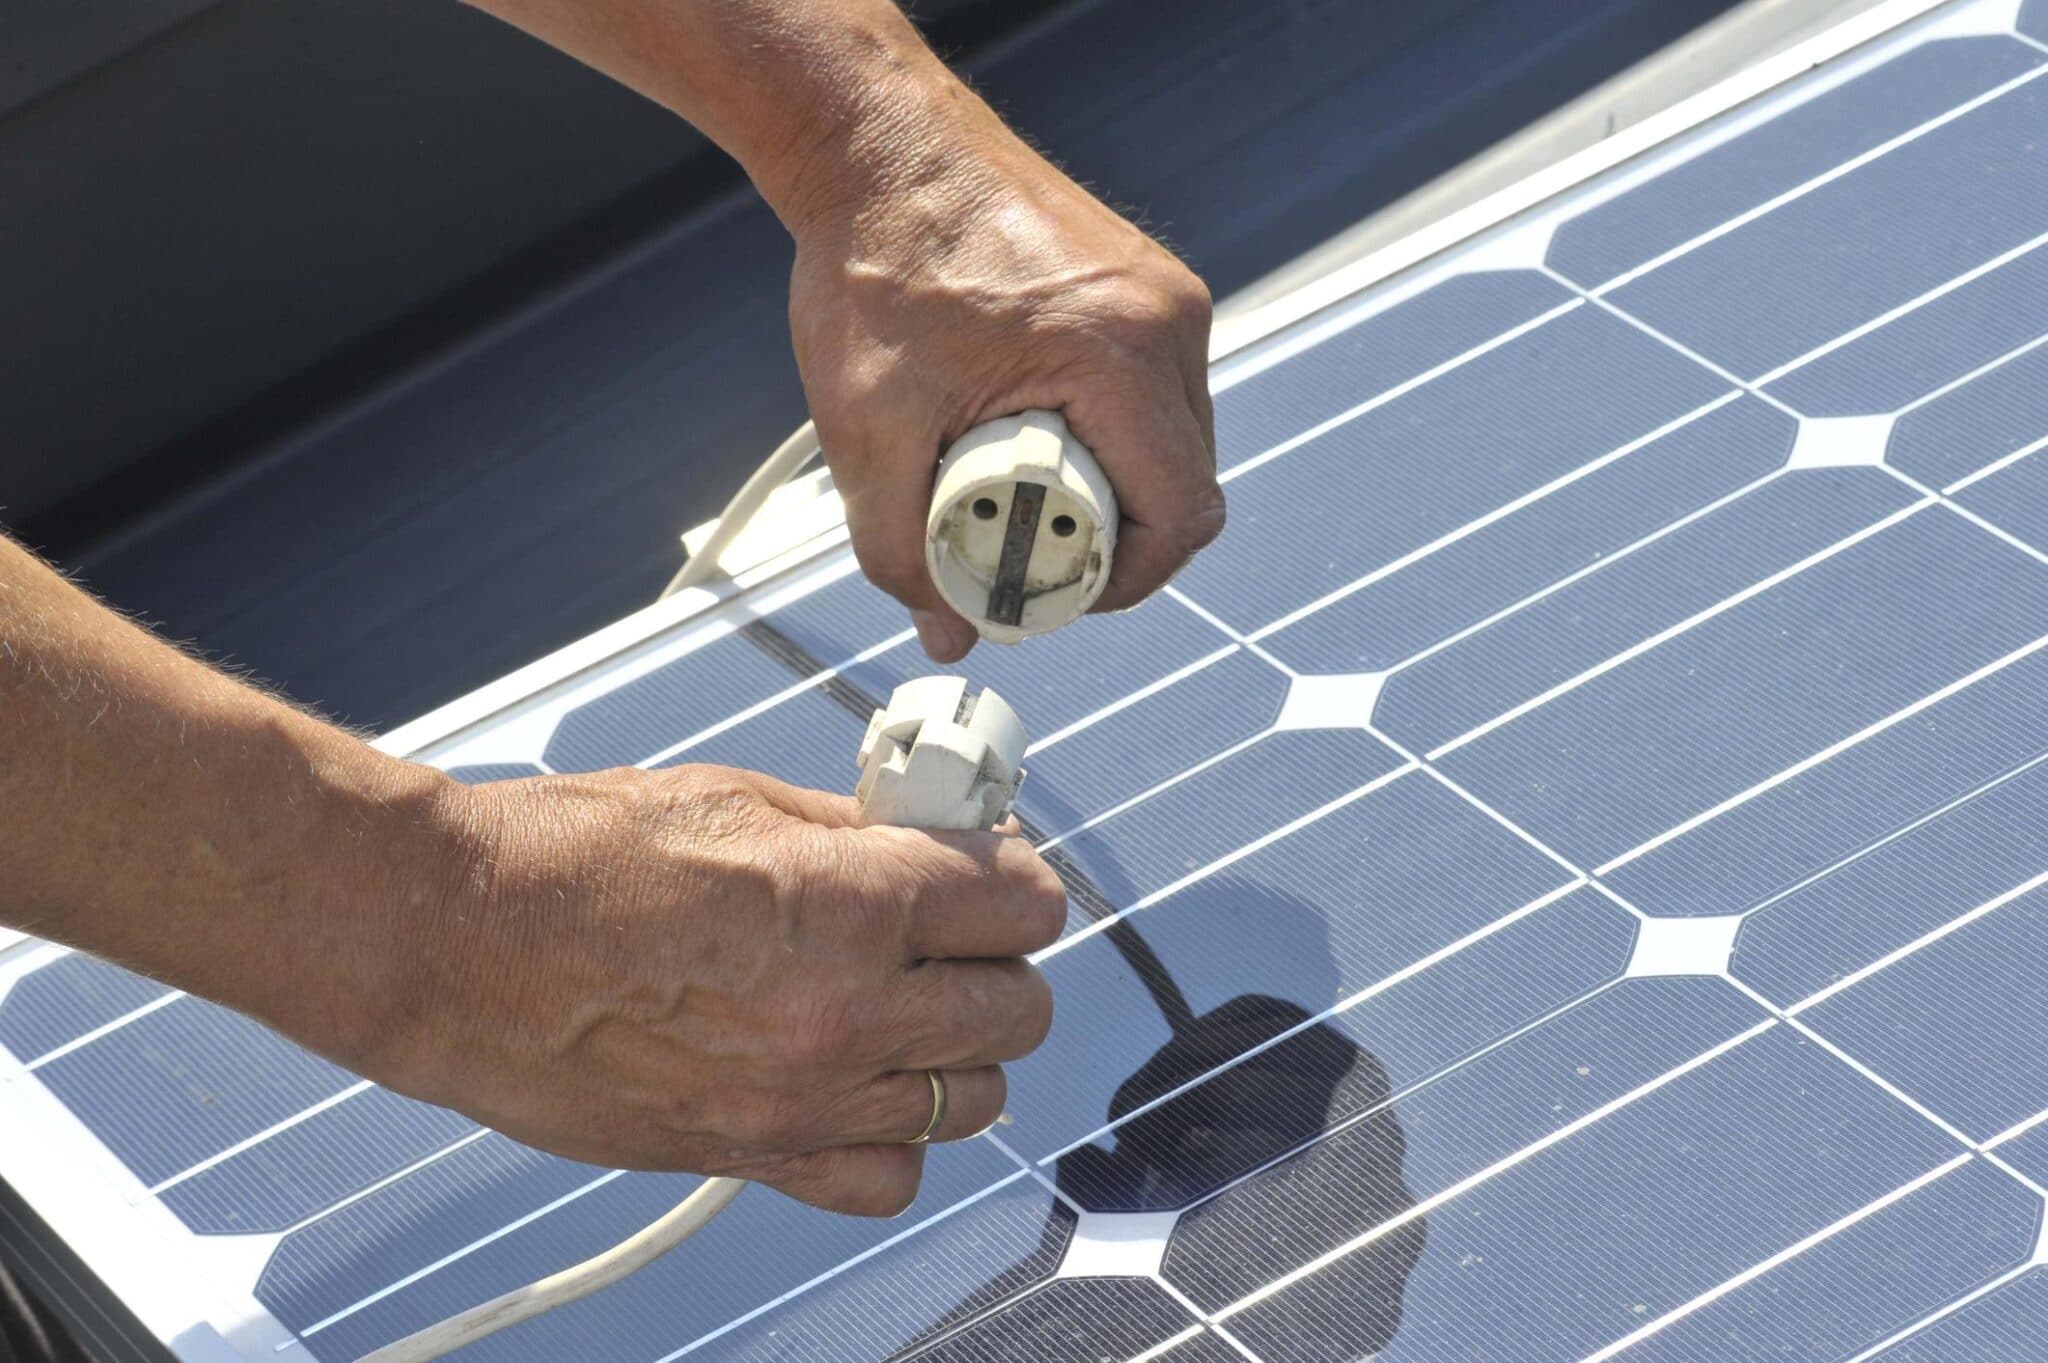 plugging in solar panel